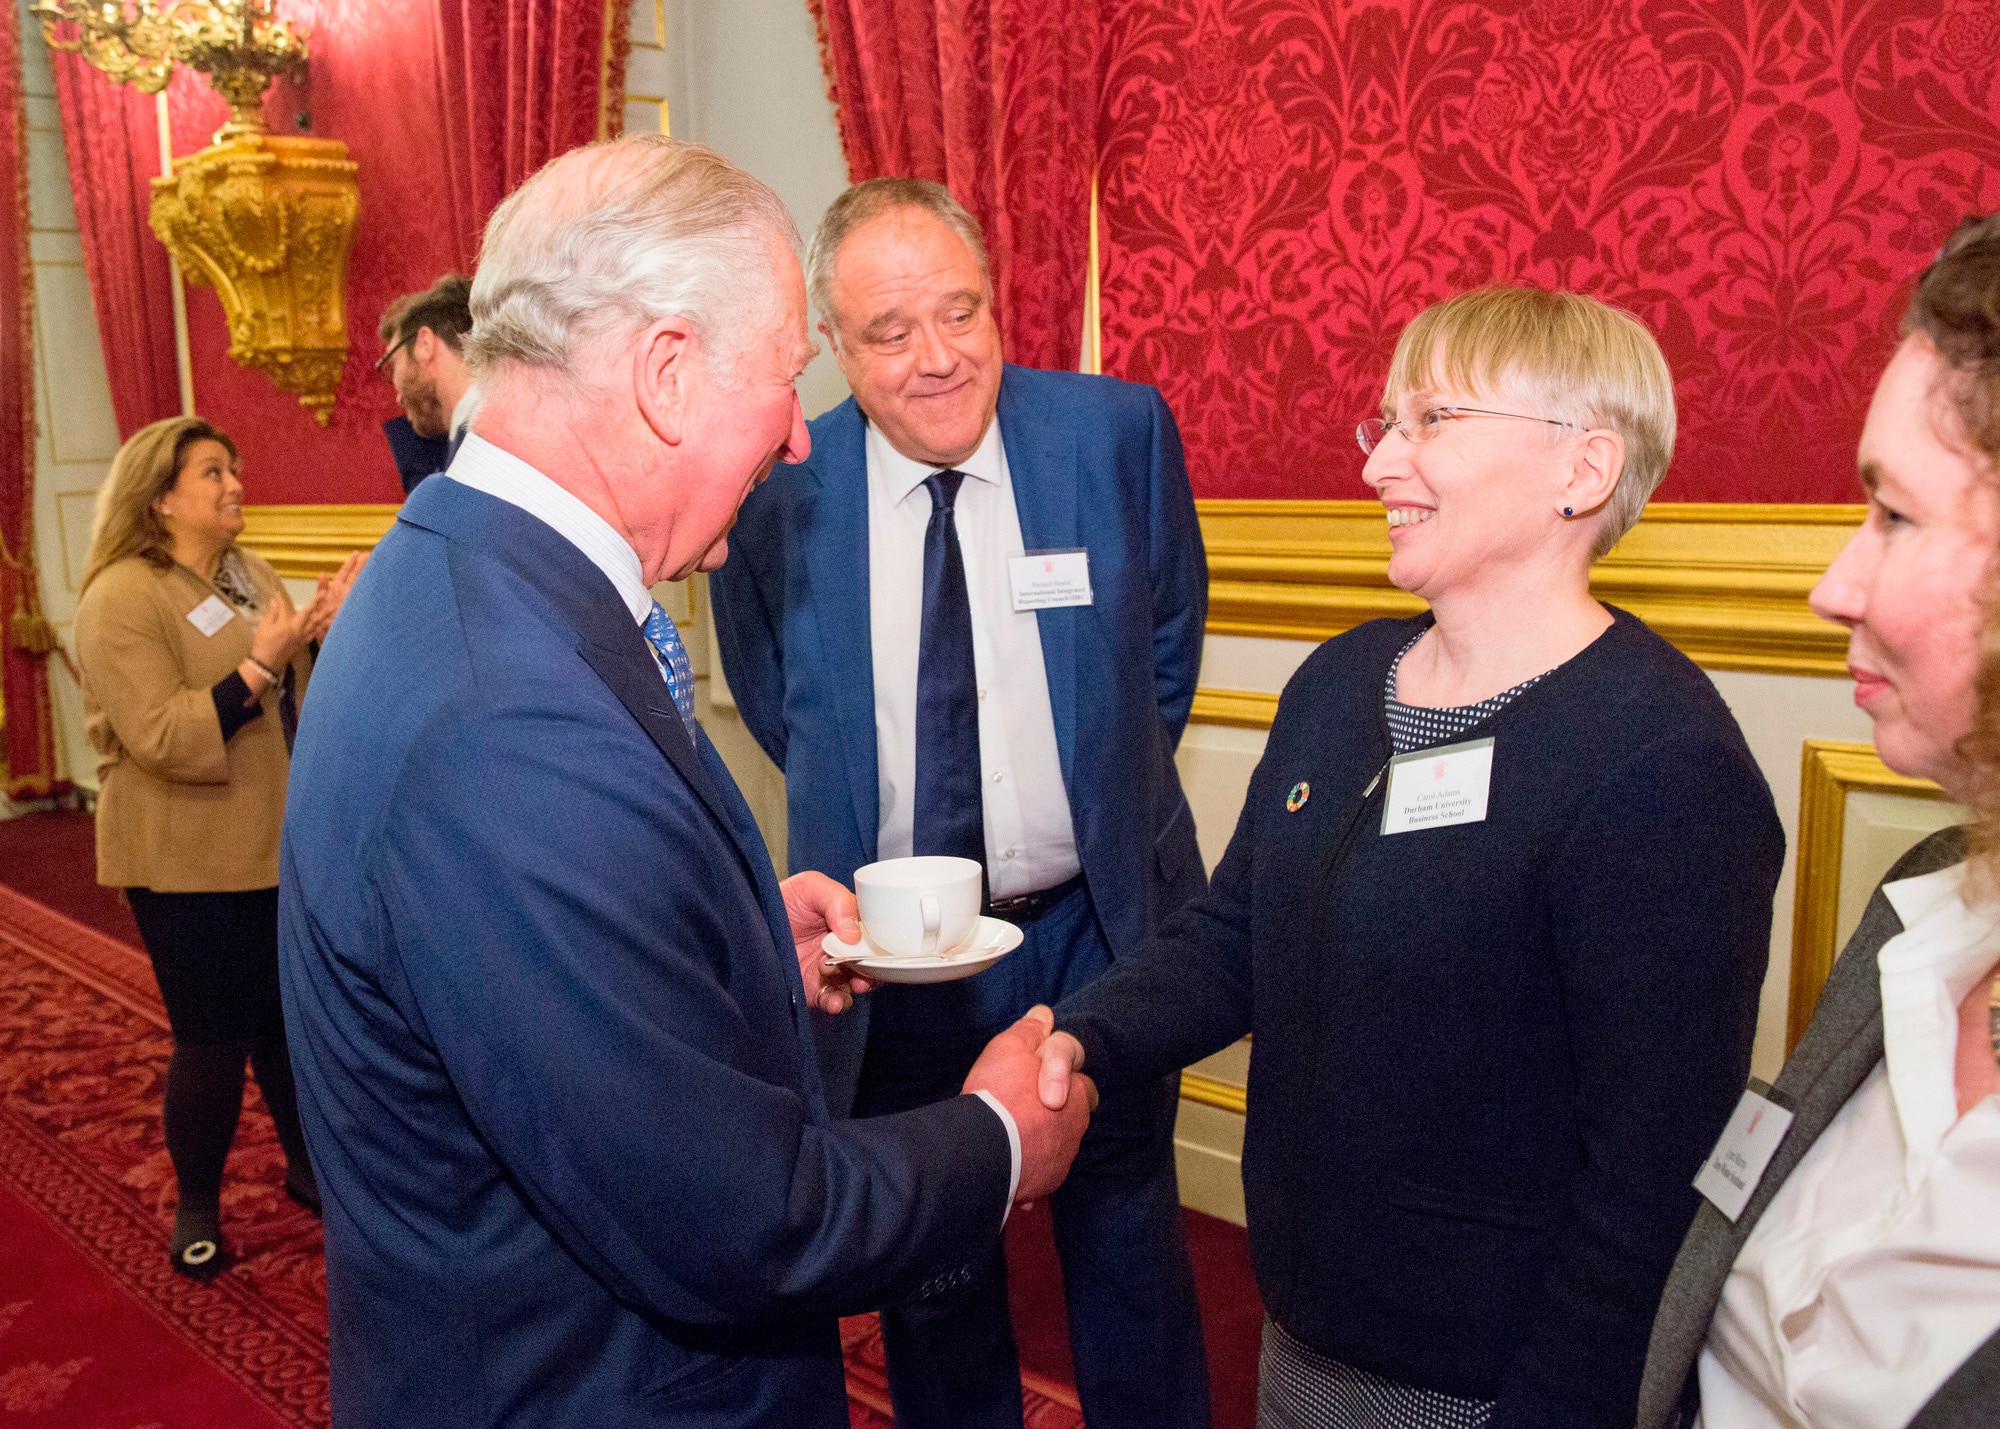 Carol meets Prince Charles